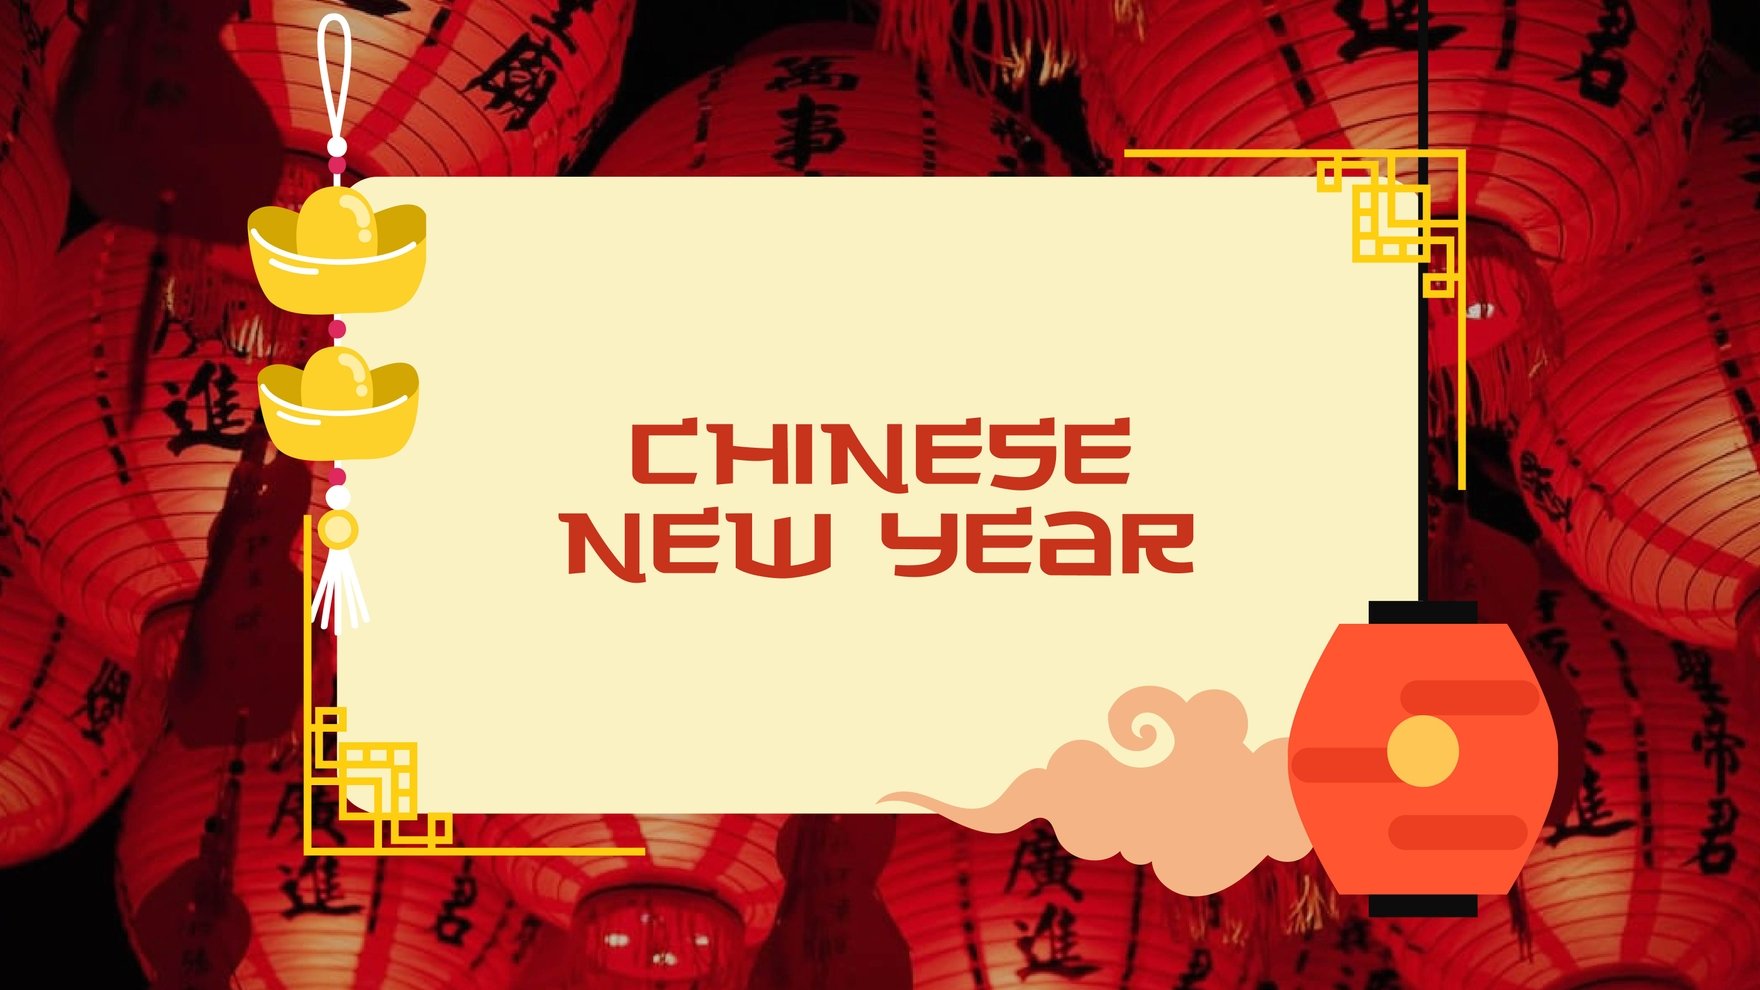 Free Chinese New Year Image Background